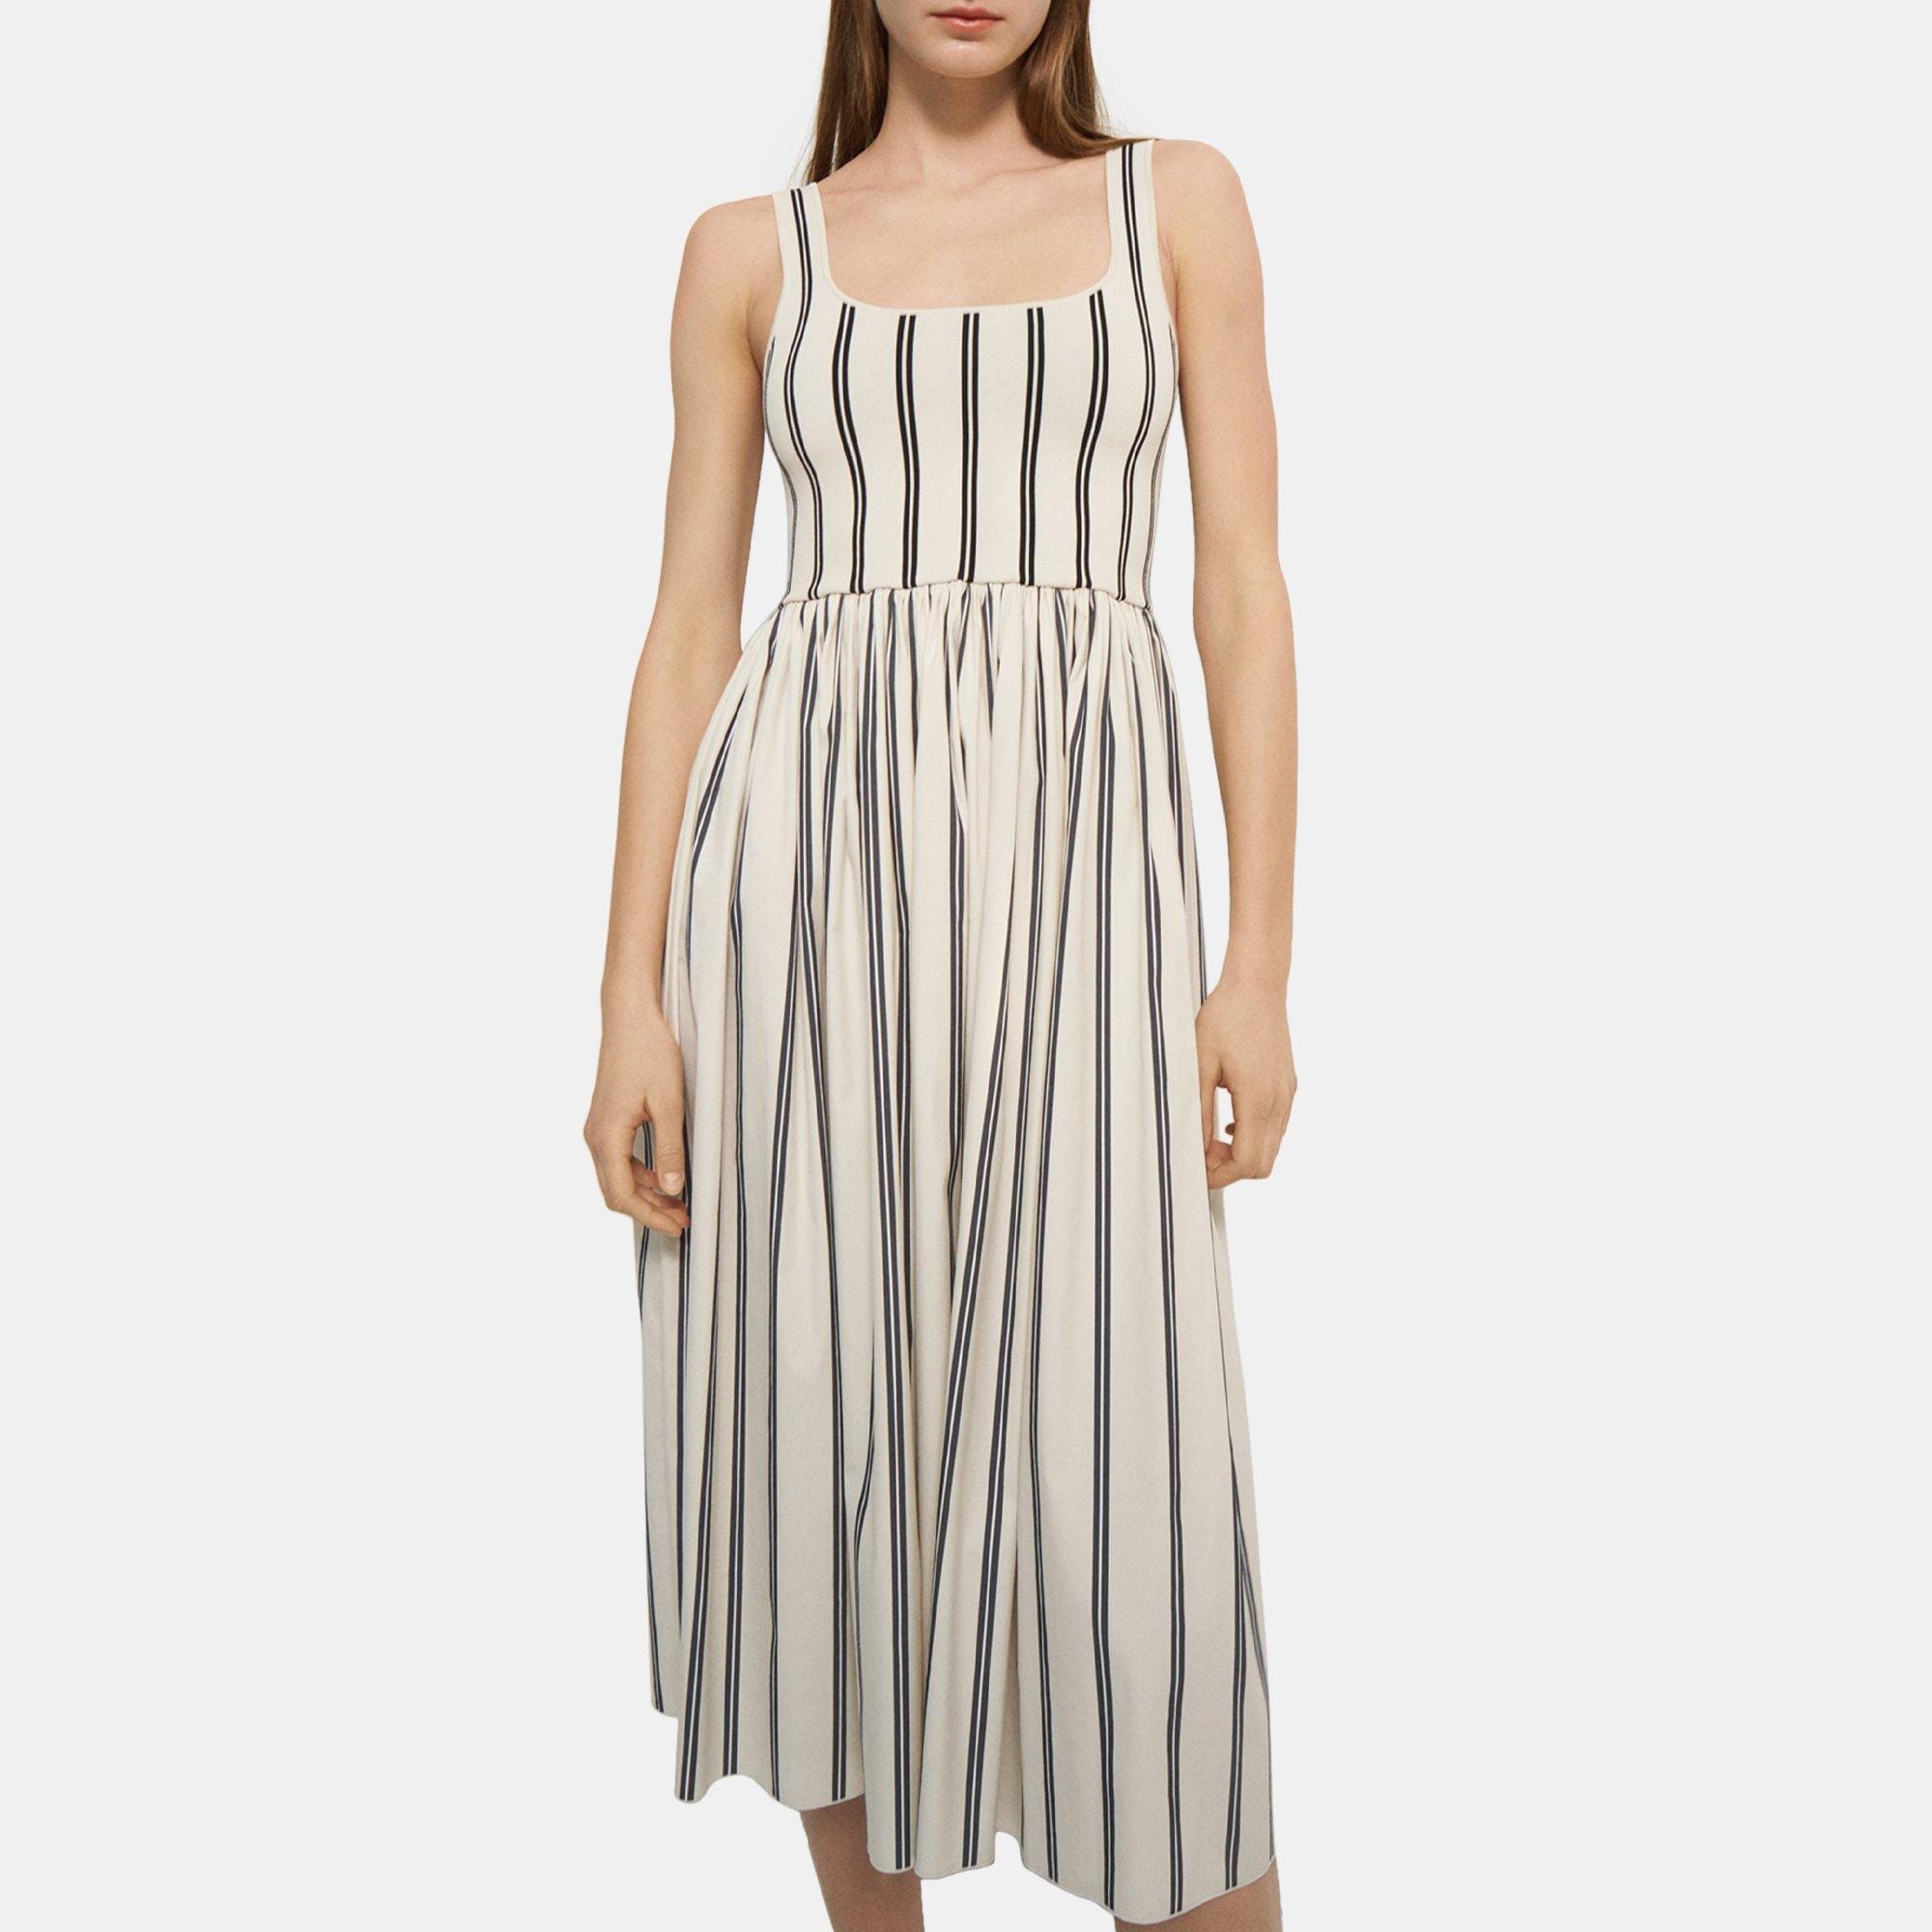 Theory Sleeveless Dress in Striped Stretch Knit